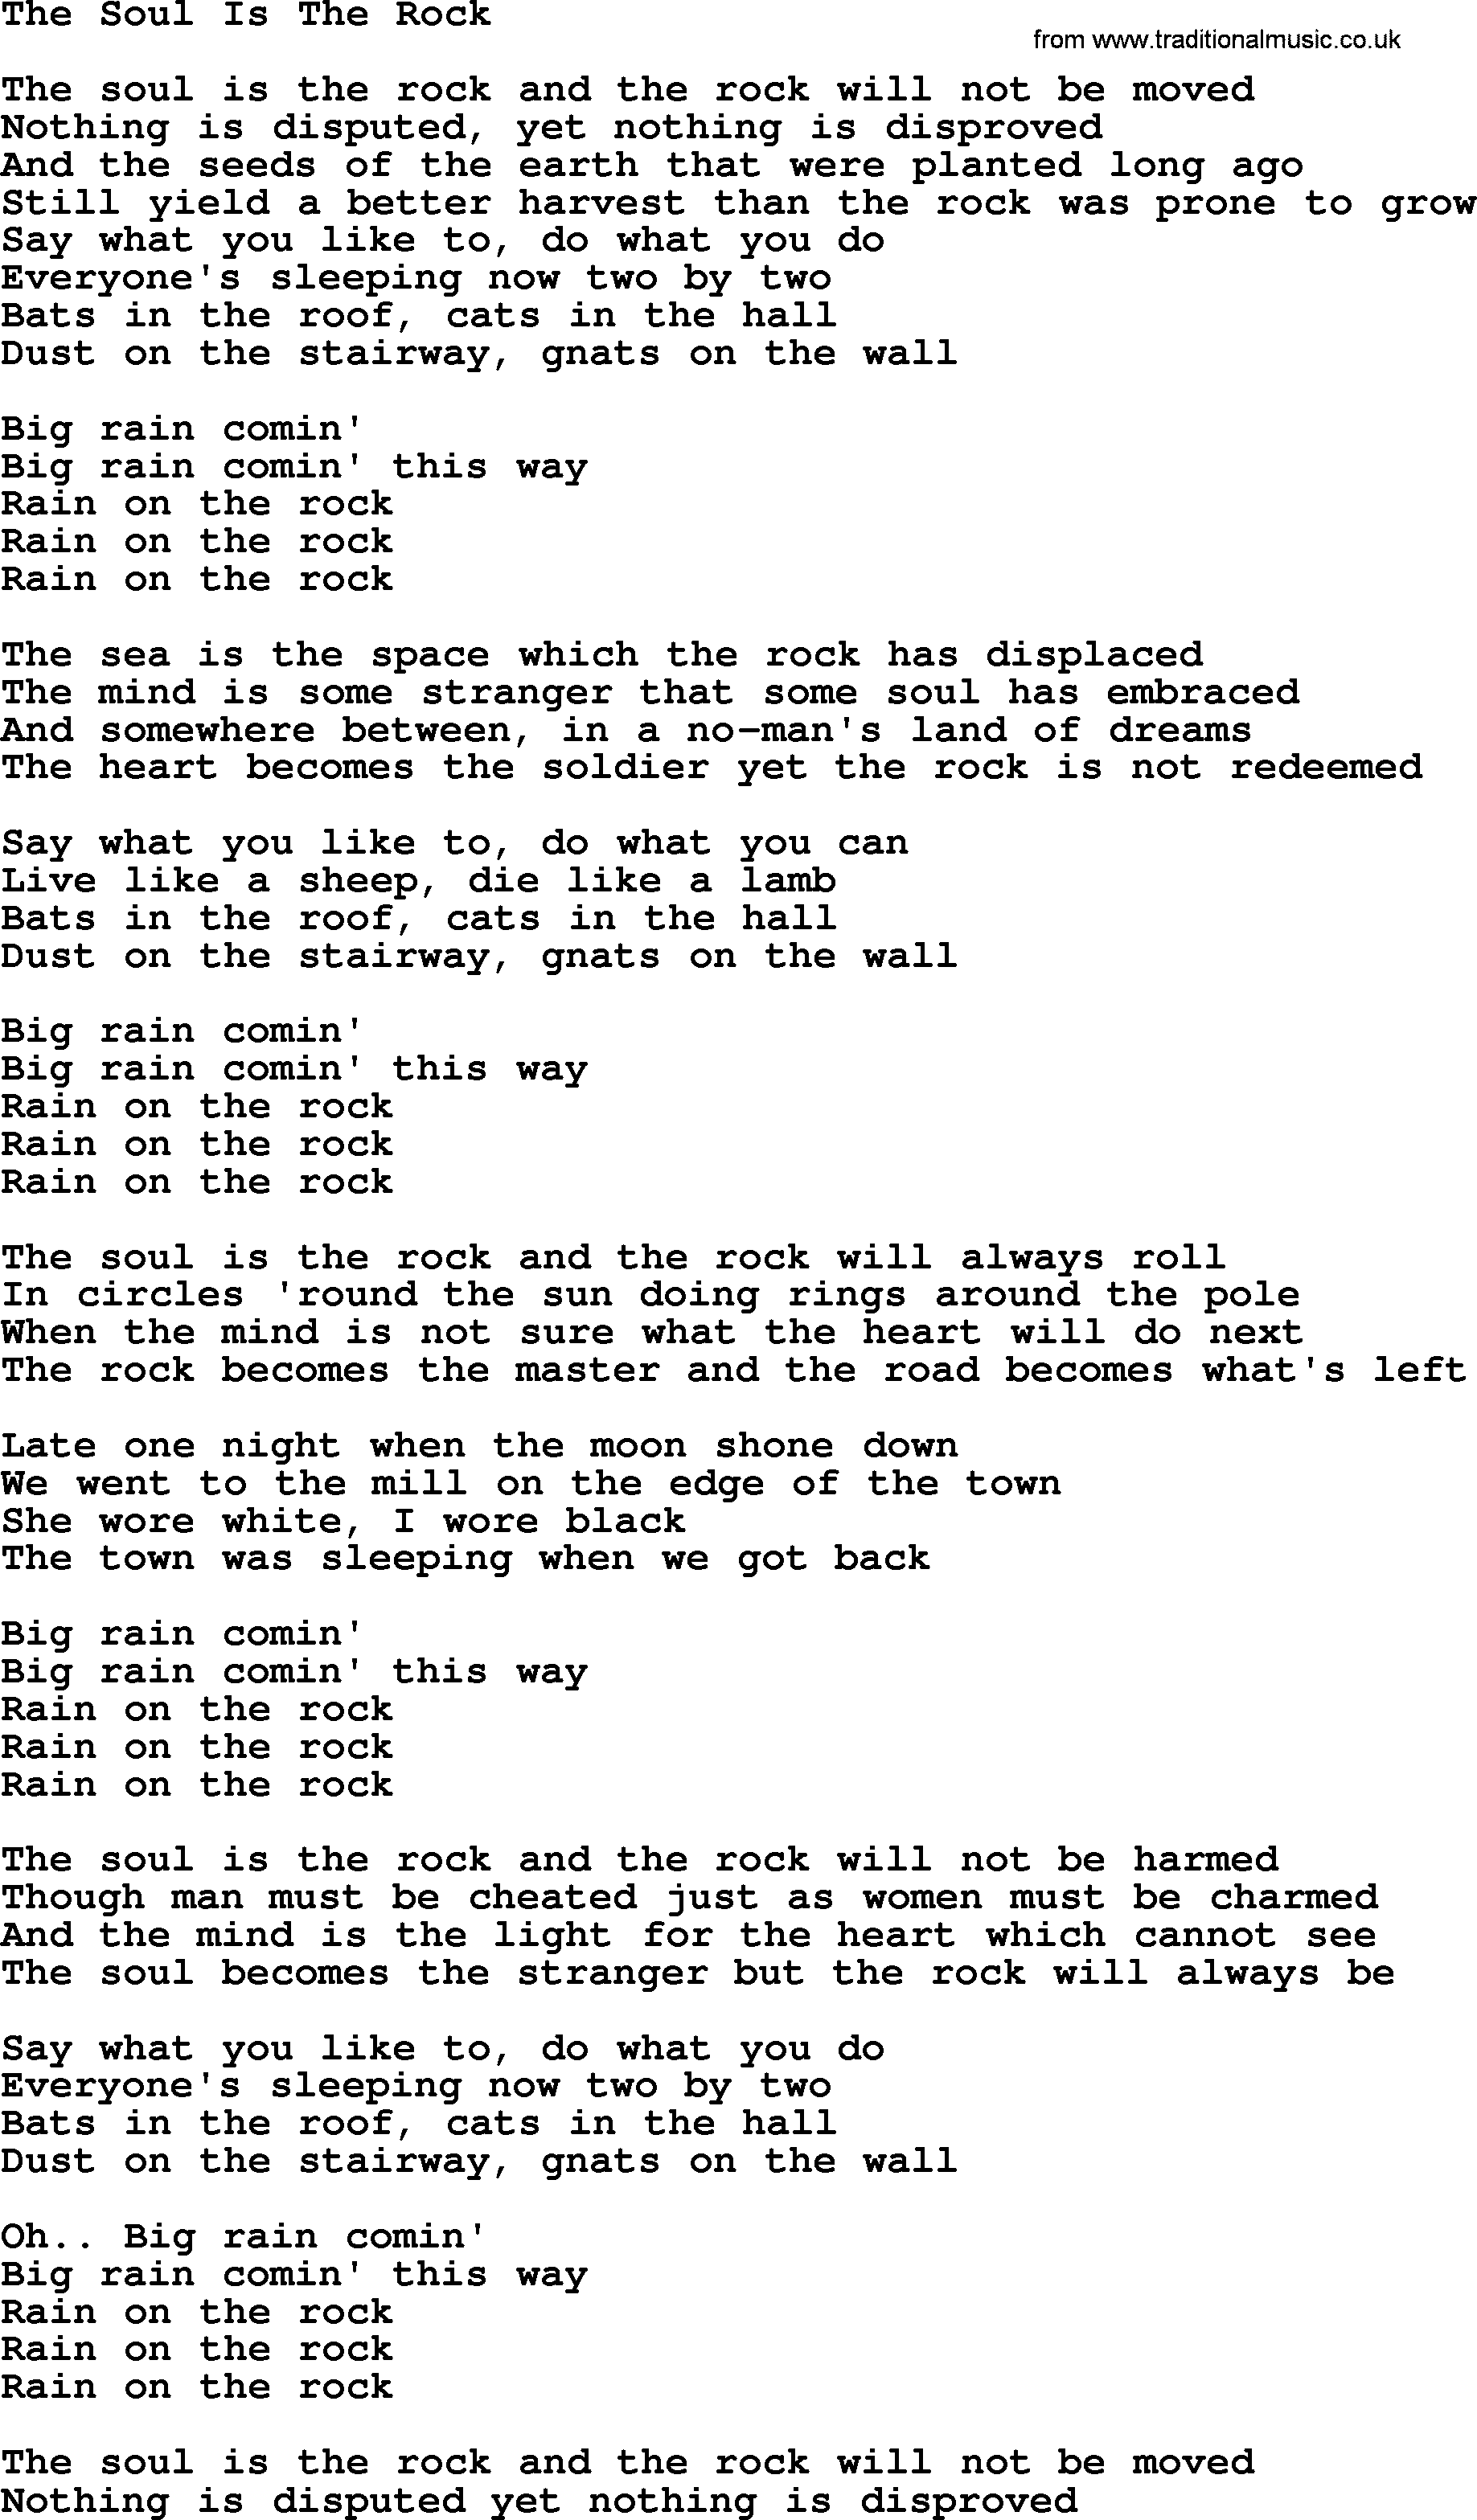 Gordon Lightfoot song The Soul Is The Rock, lyrics